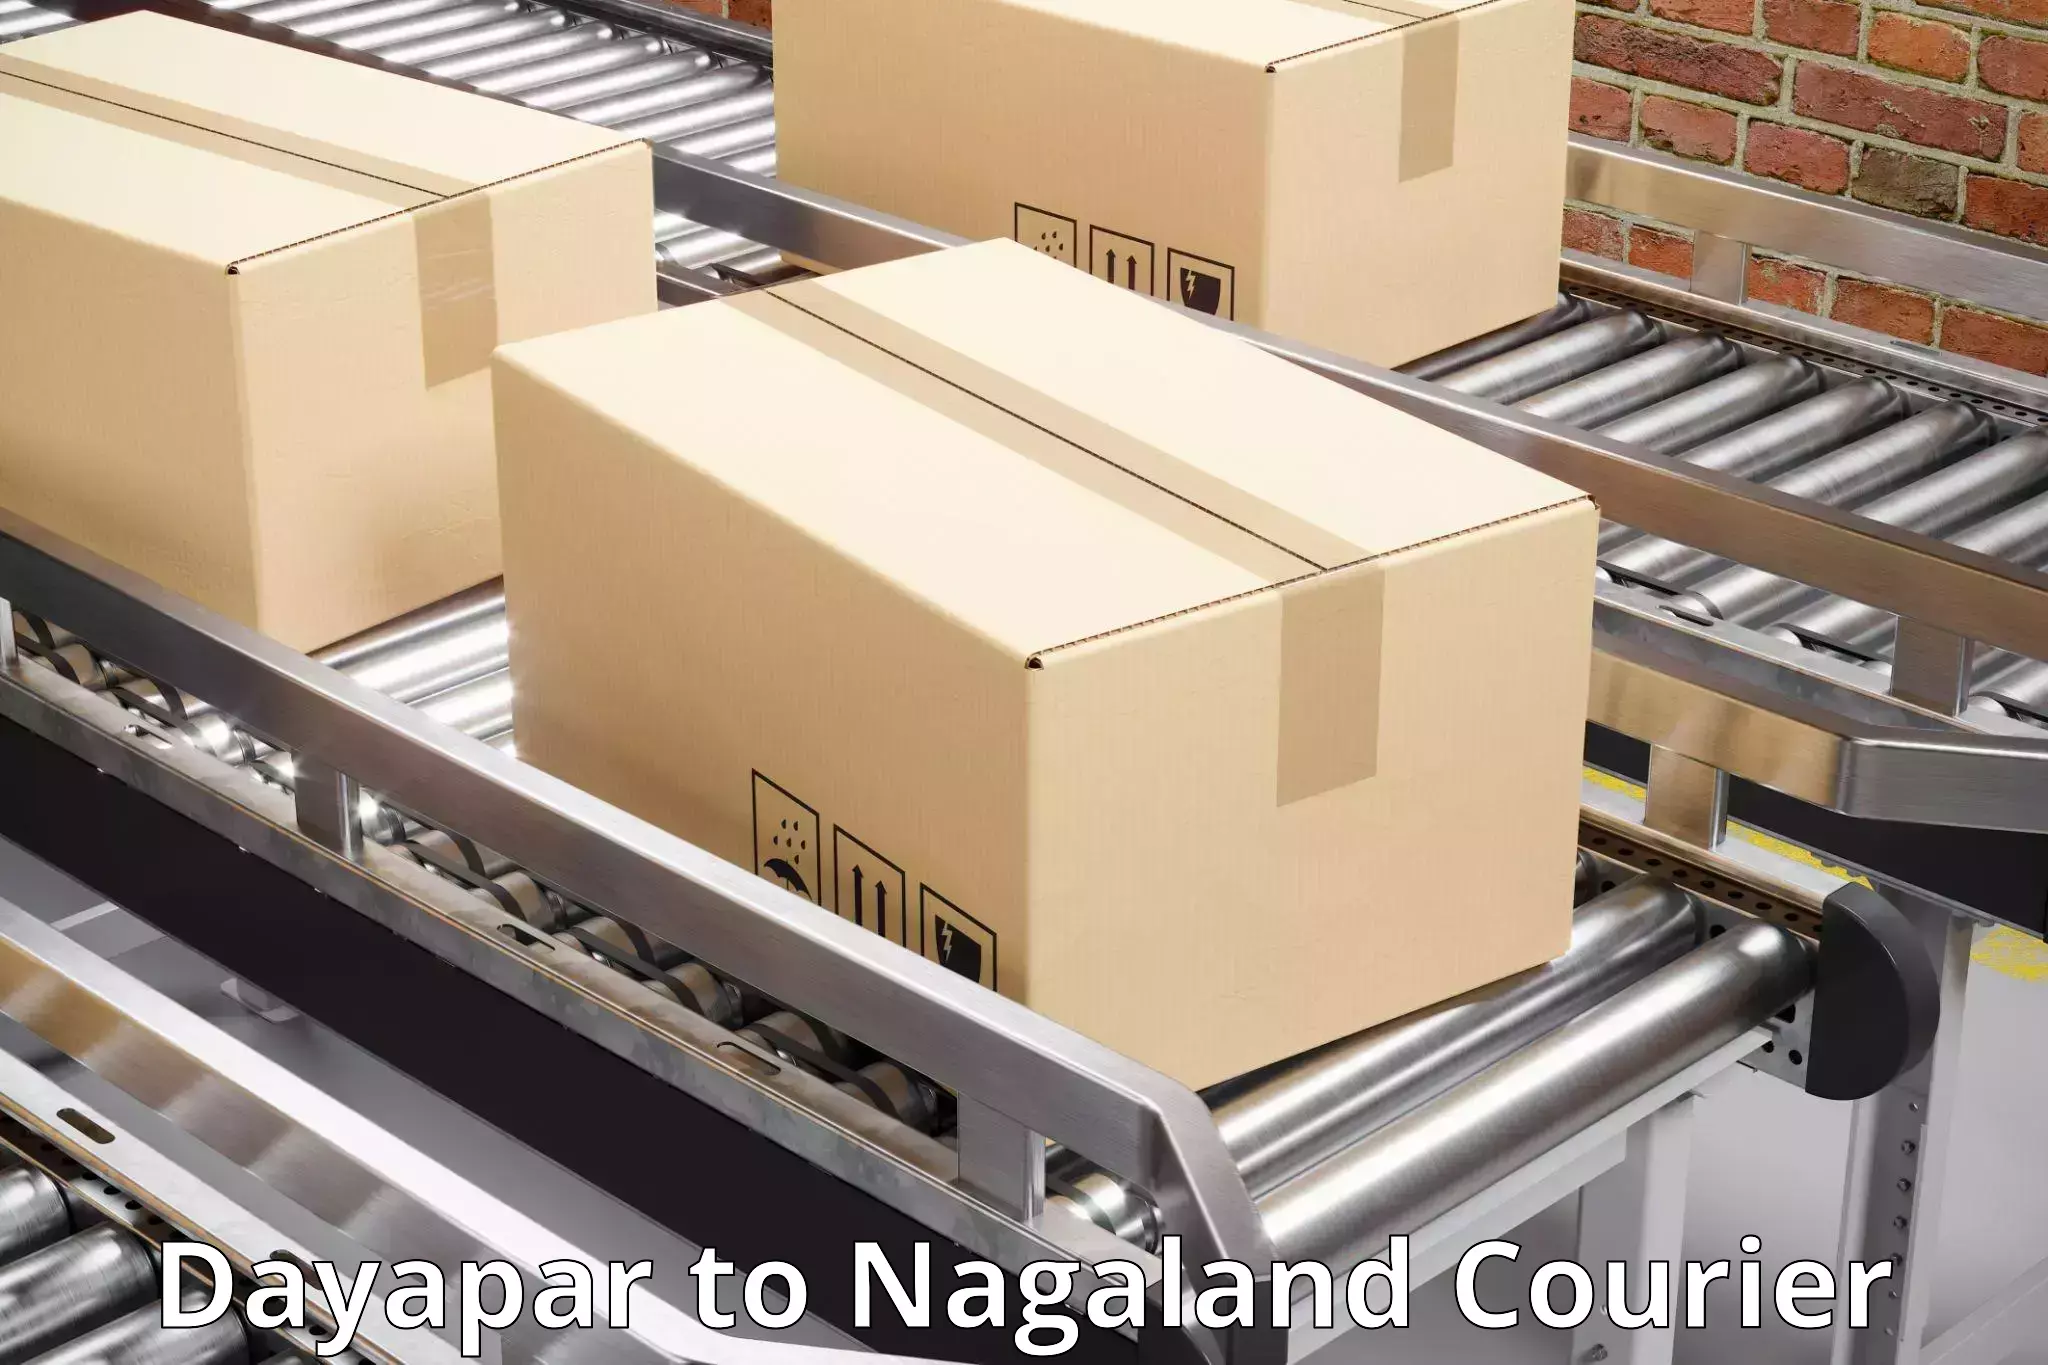 Global logistics network Dayapar to Nagaland